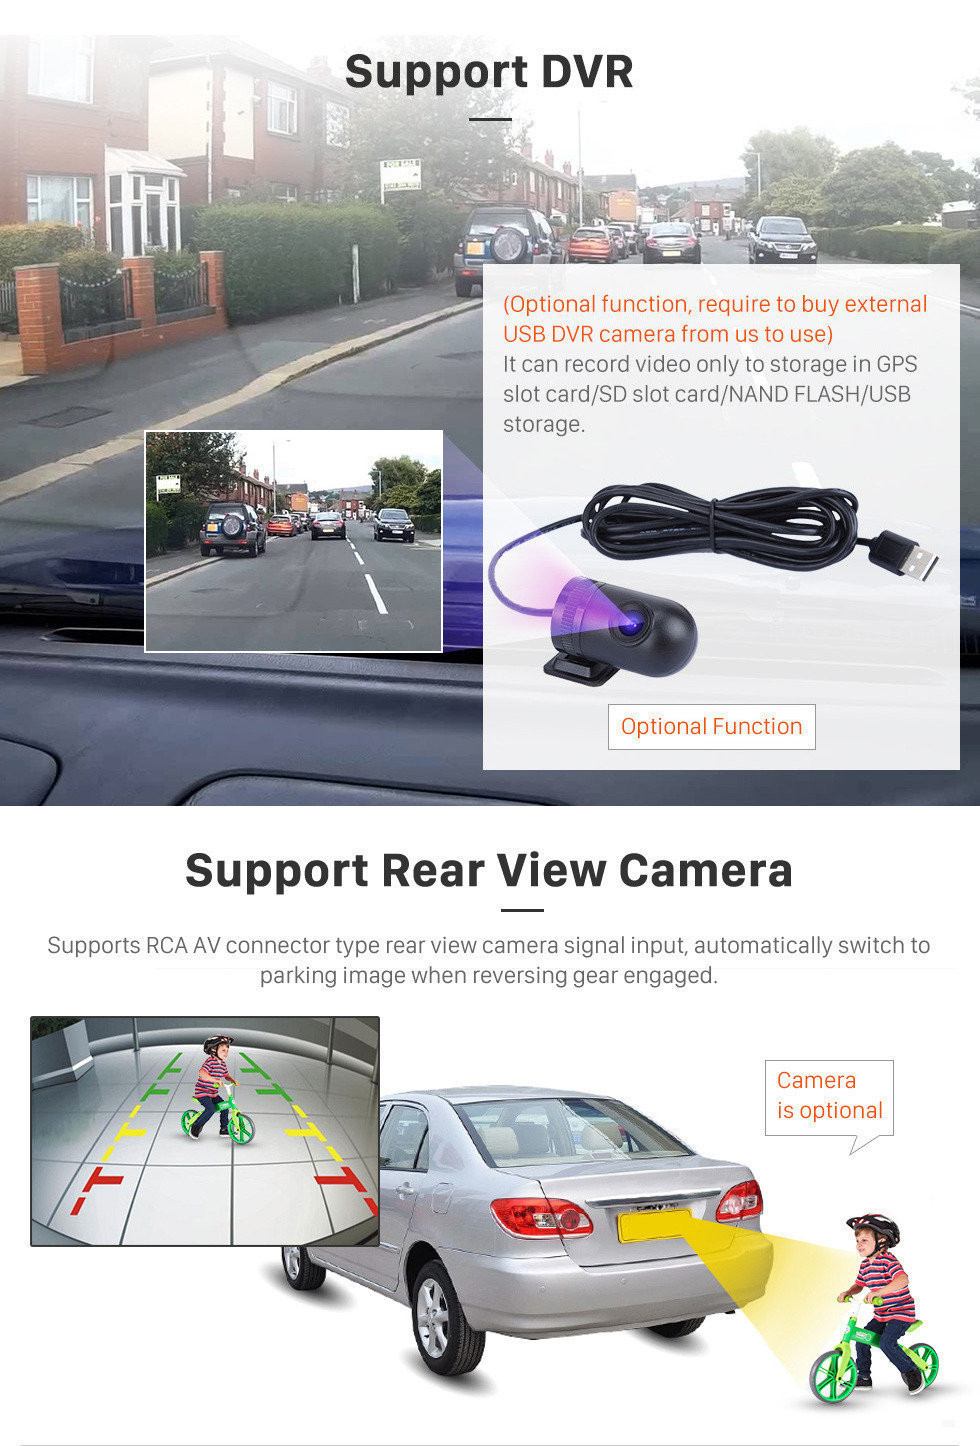 Seicane 9 polegadas Android 11.0 HD Touchscreen Estéreo no Dash para 2014 2015 2016 Mitsubishi Lancer GPS Navi Rádio Bluetooth WIFI USB Phone Music SWC DAB + Carplay 1080P Video